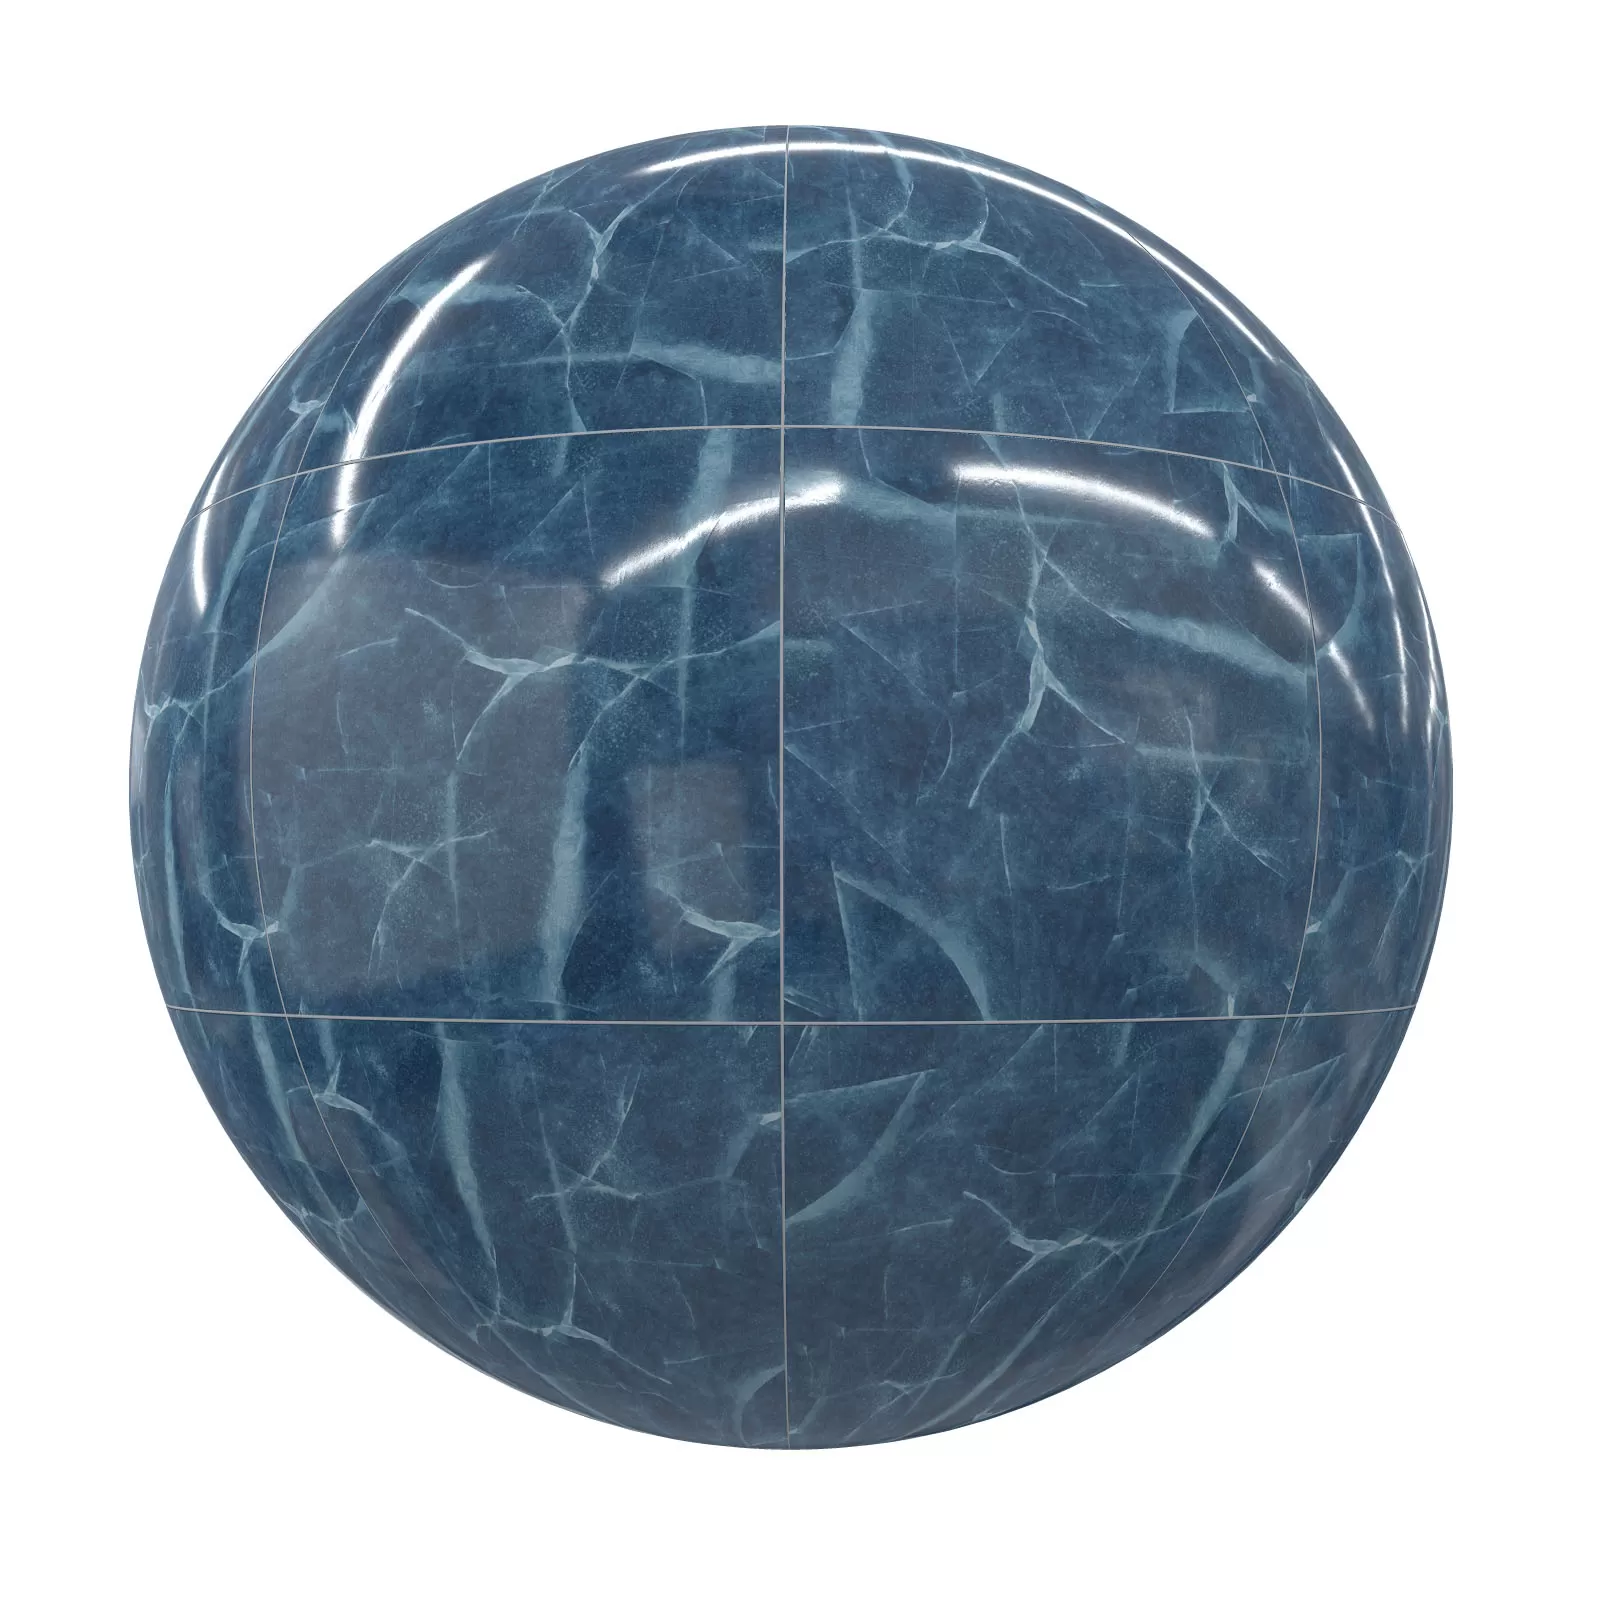 PBR CGAXIS TEXTURES – TILES – Blue Marble Tiles